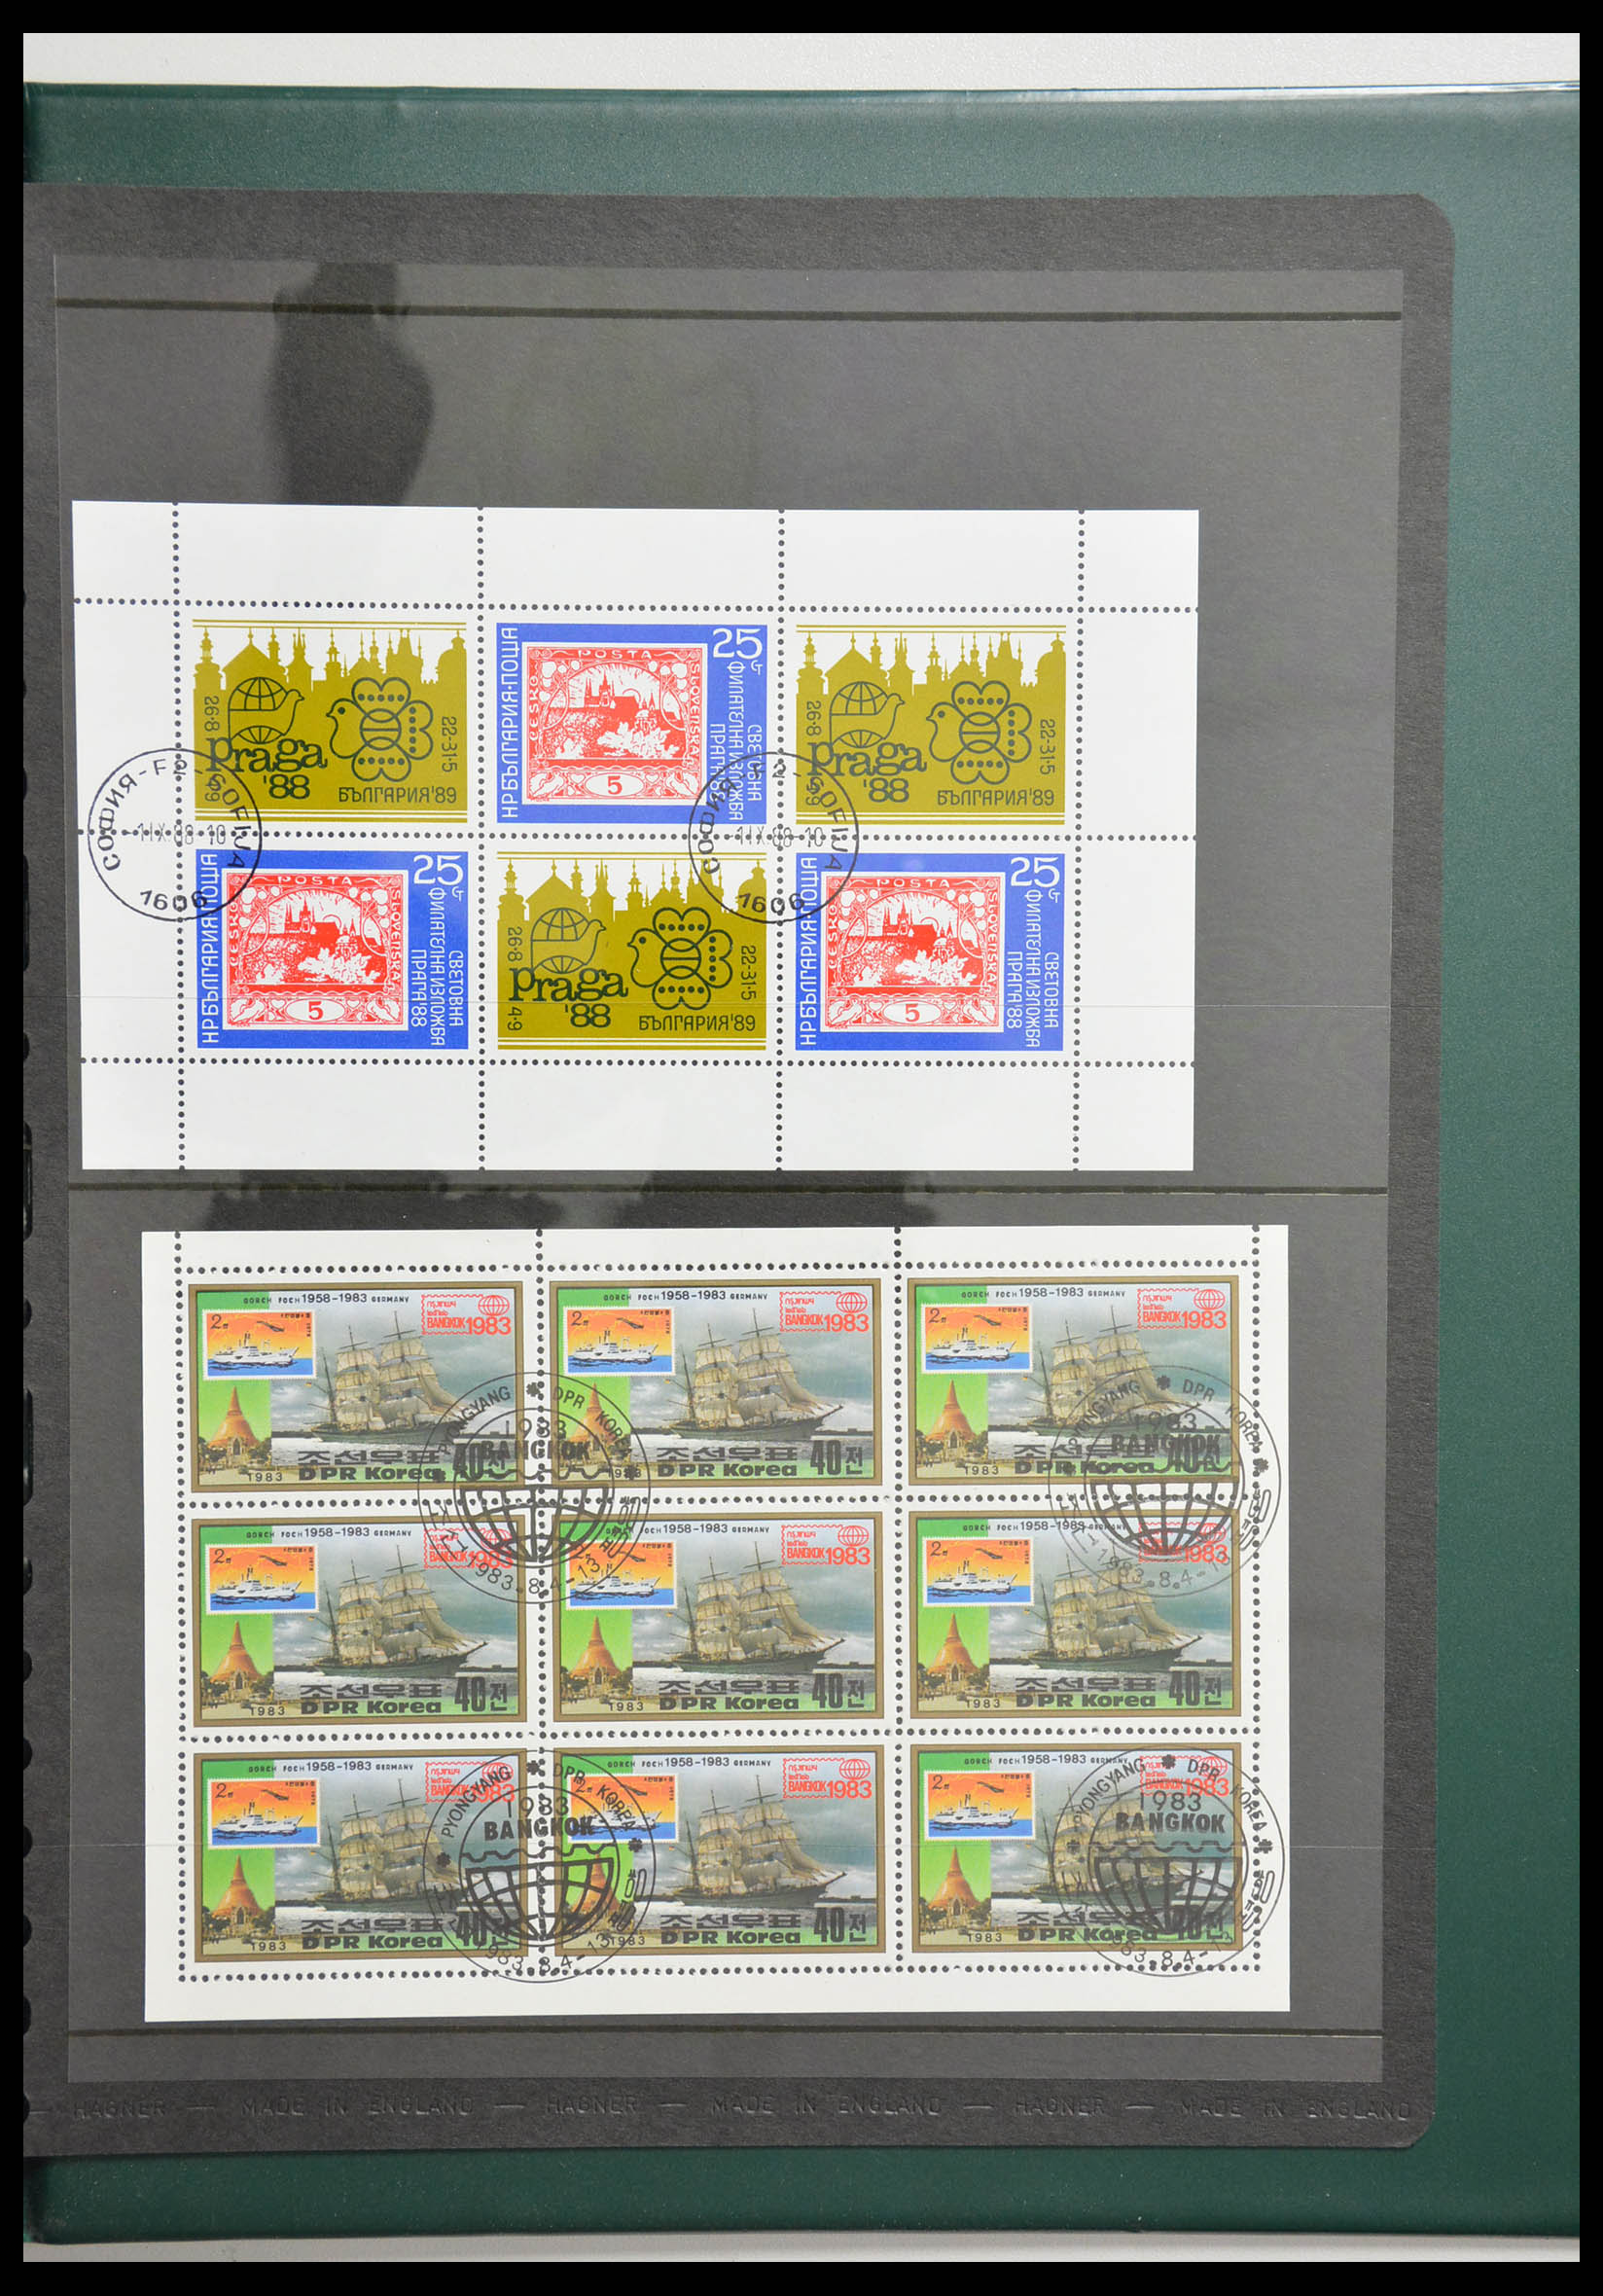 28337 093 - 28337 Postzegel op postzegel 1840-2001.